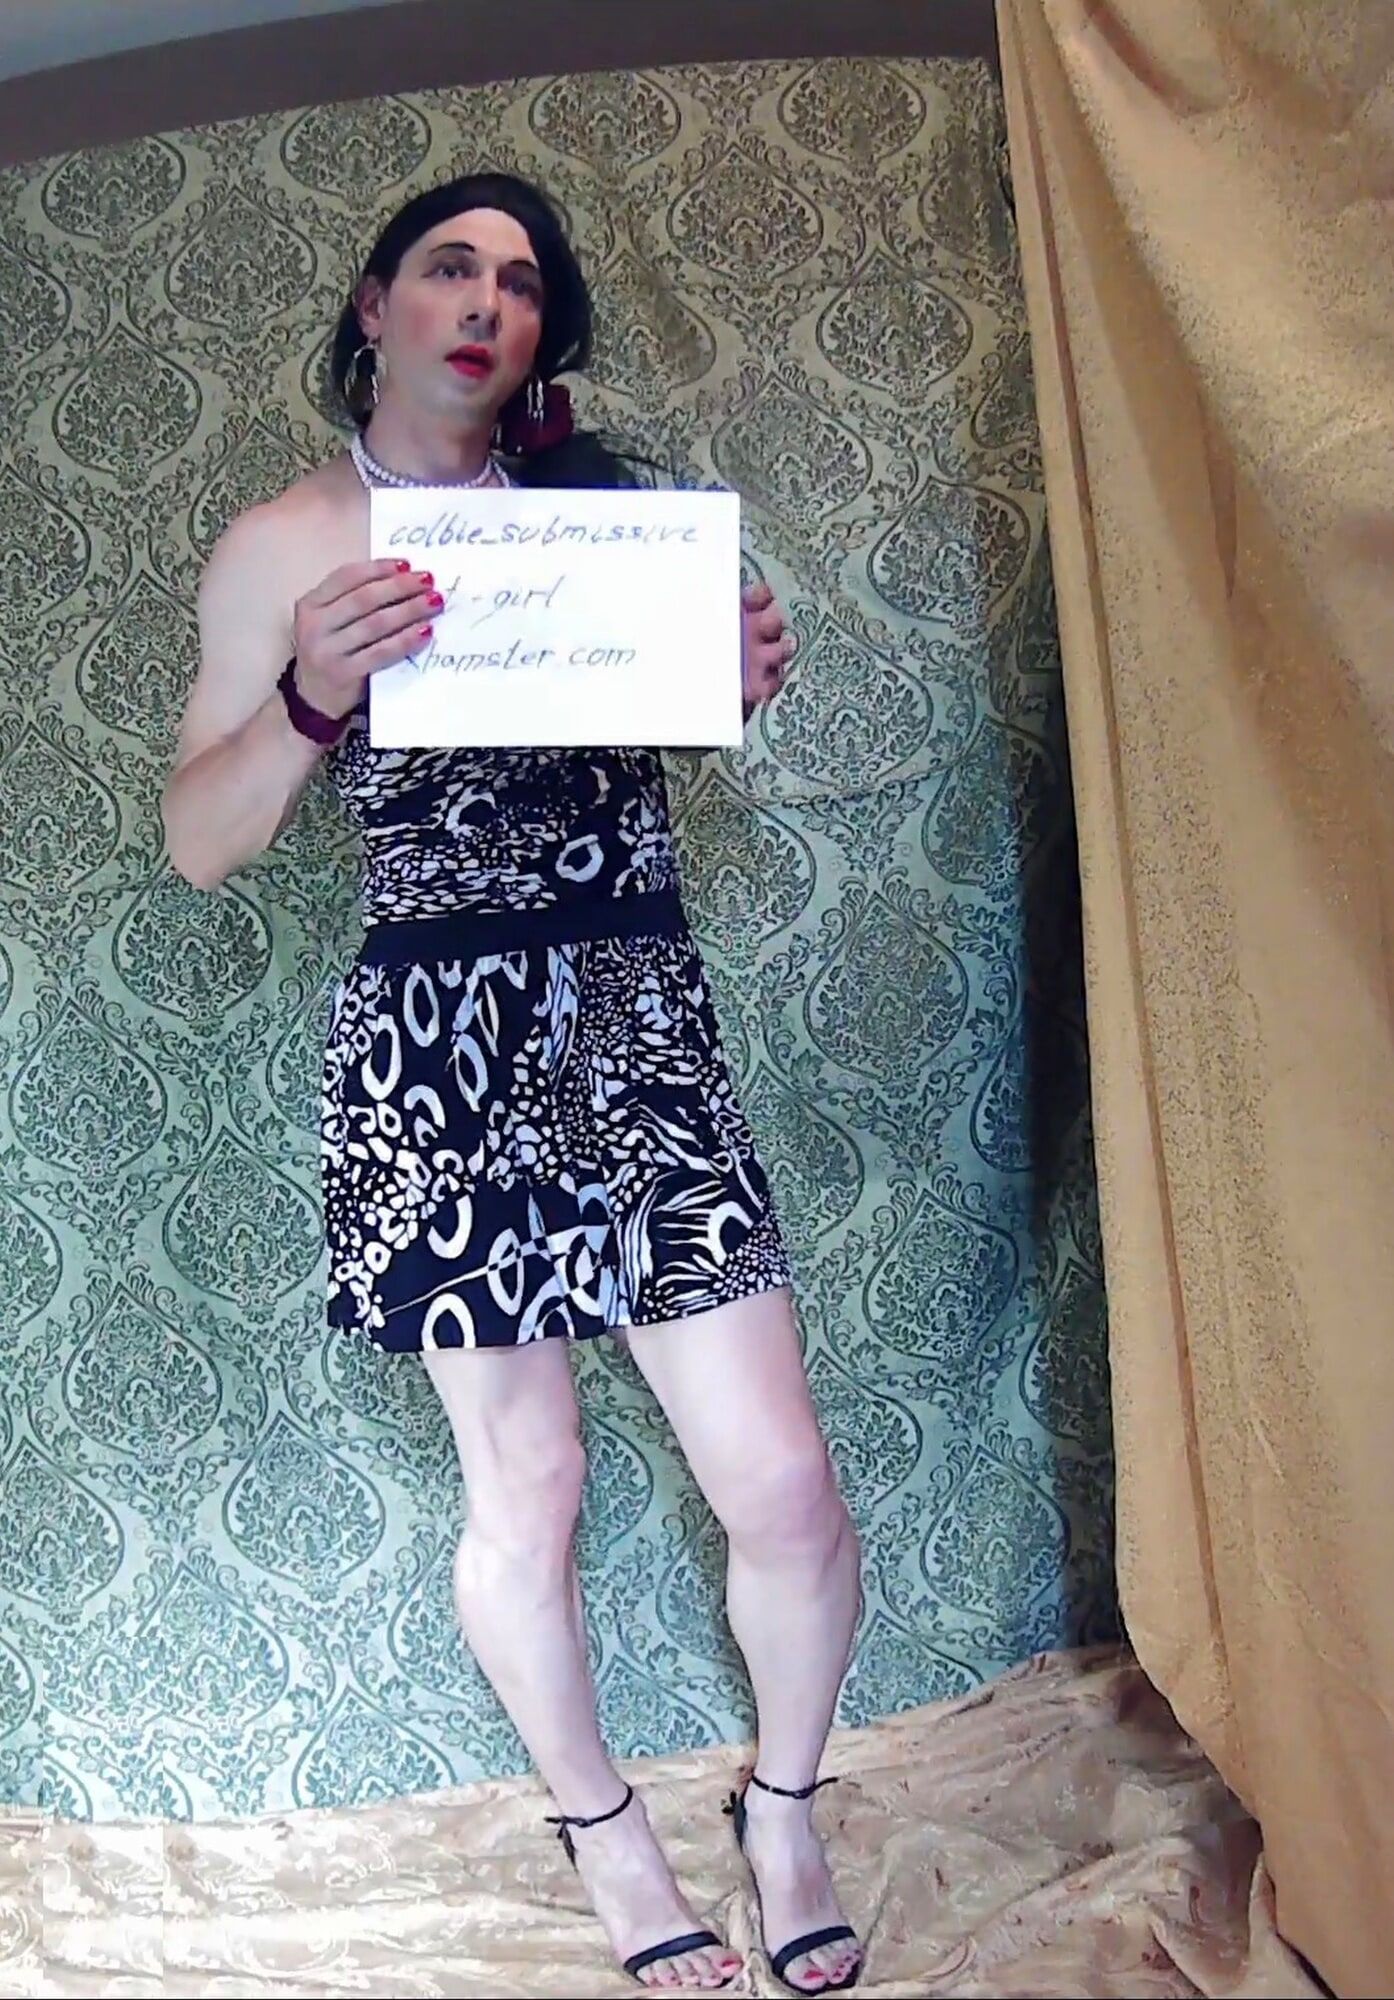 Shemale slut Colbietgirl in dress and heels #4